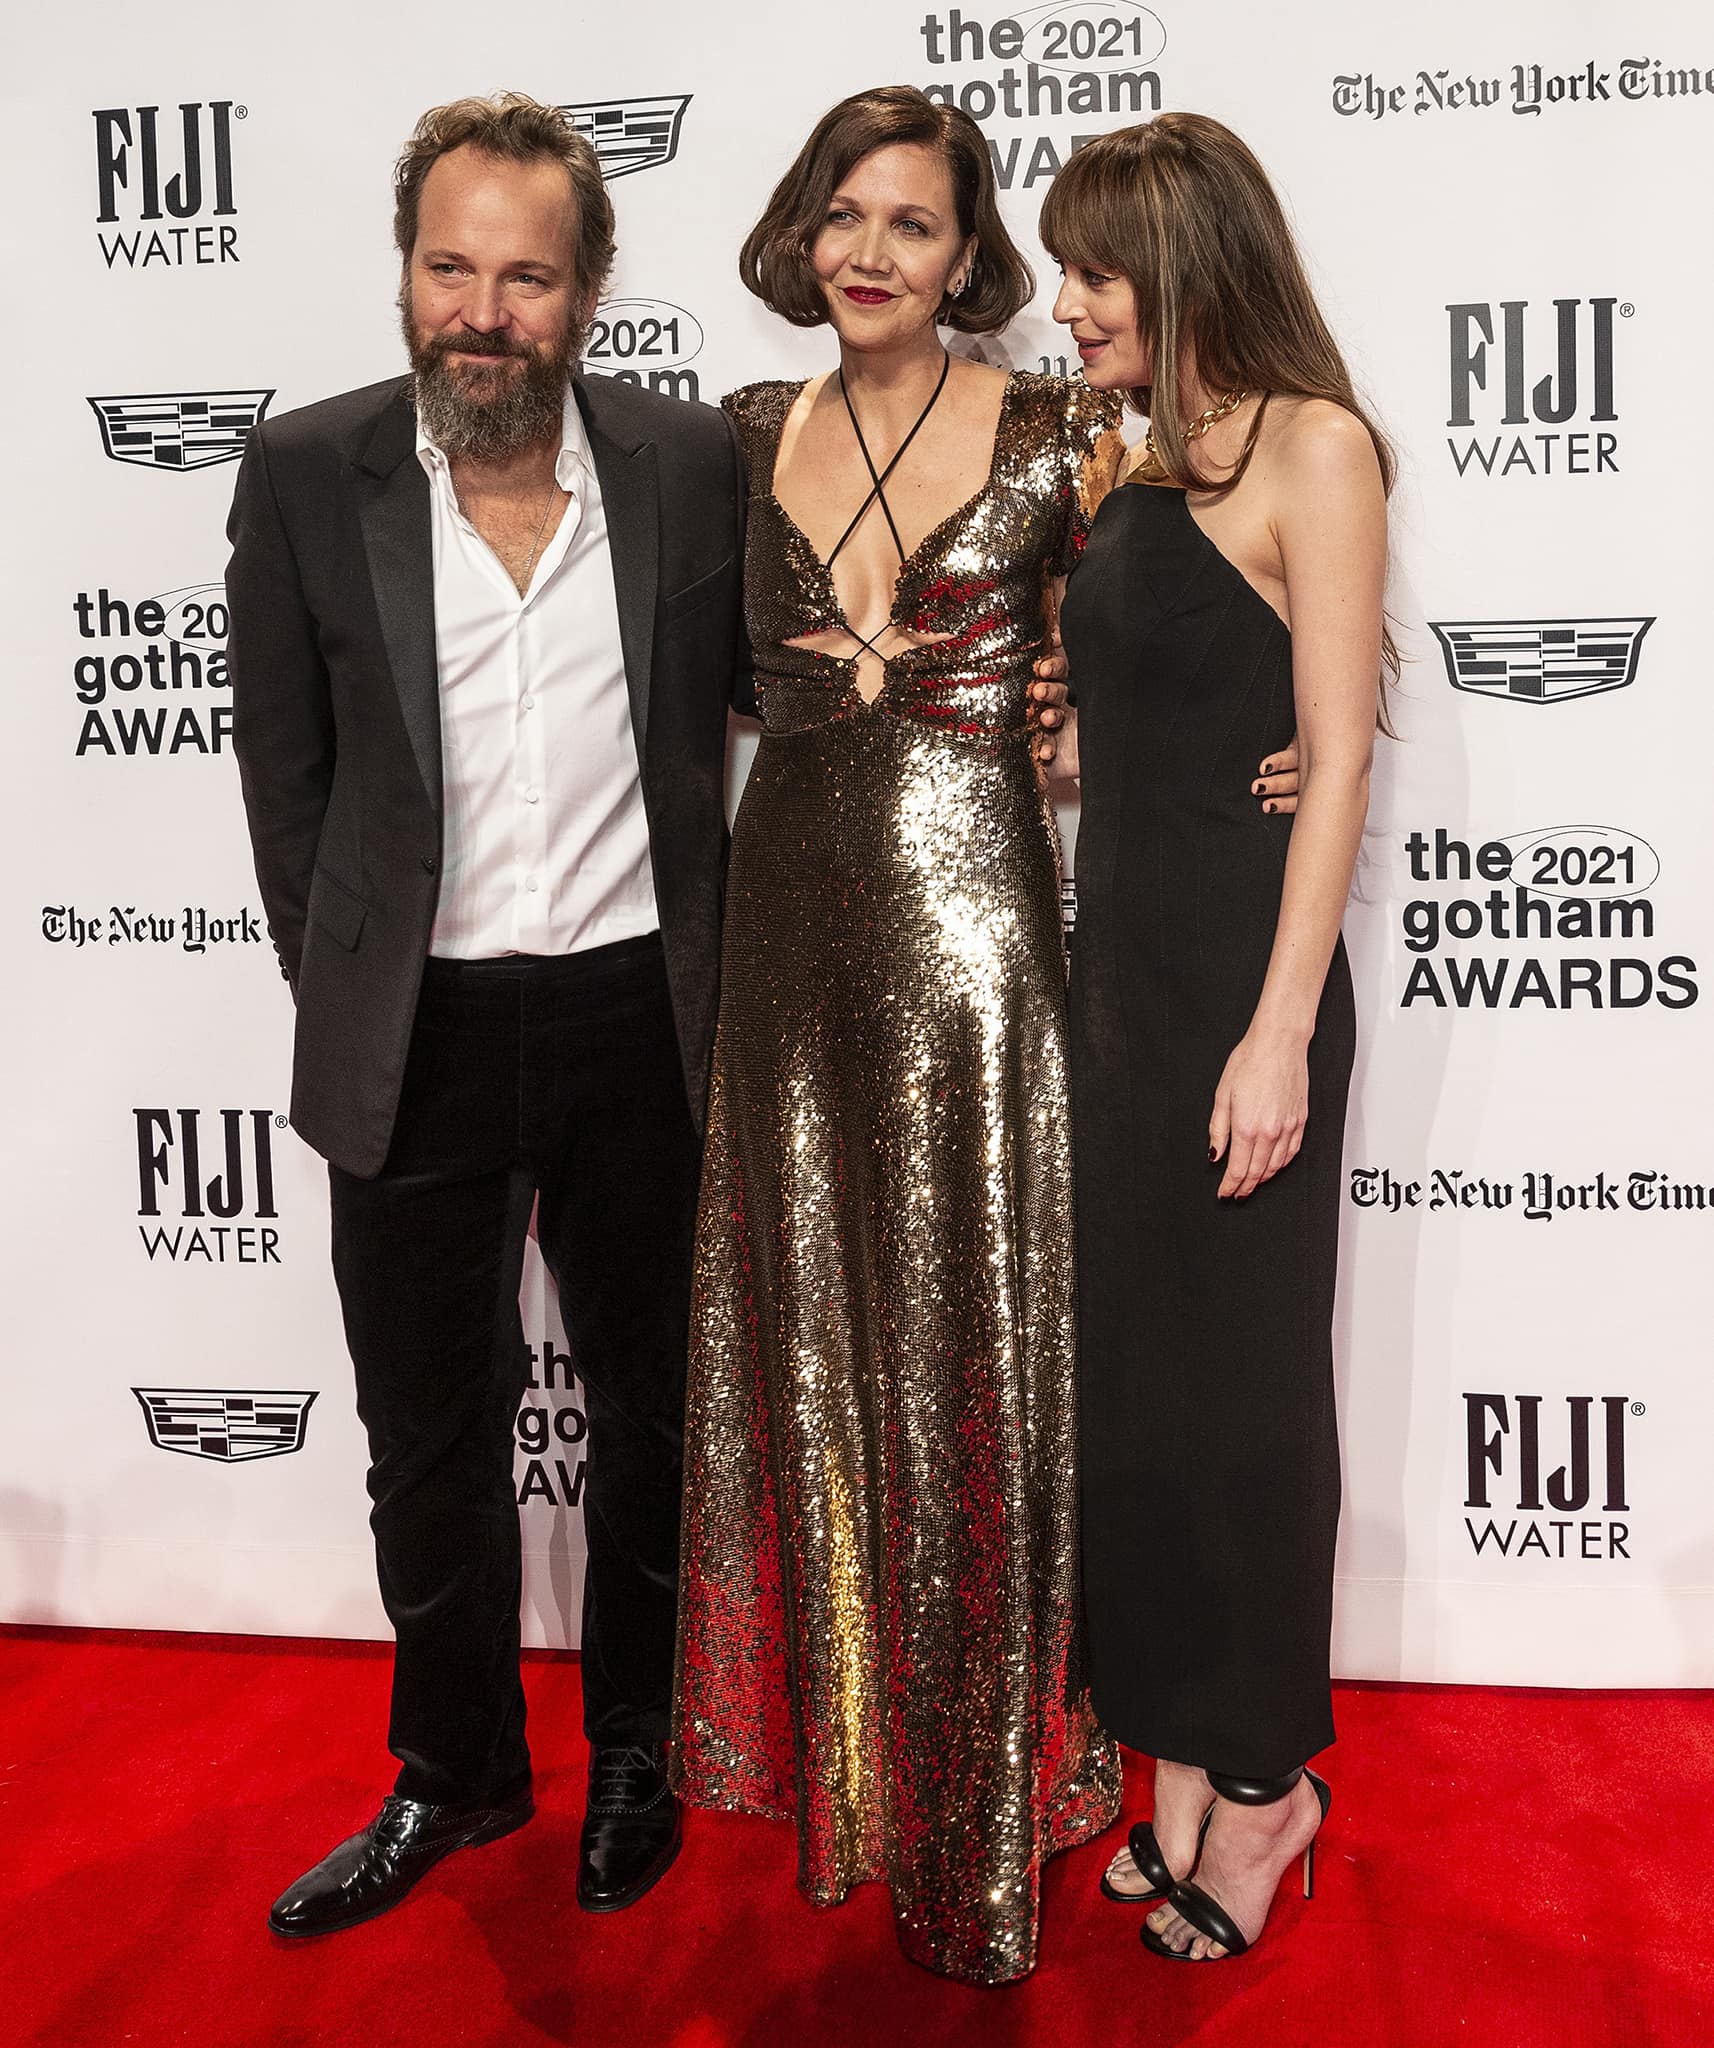 Peter Sarsgaard, wife Maggie Gyllenhaal, and Dakota Johnson at the 31st Annual Gotham Awards